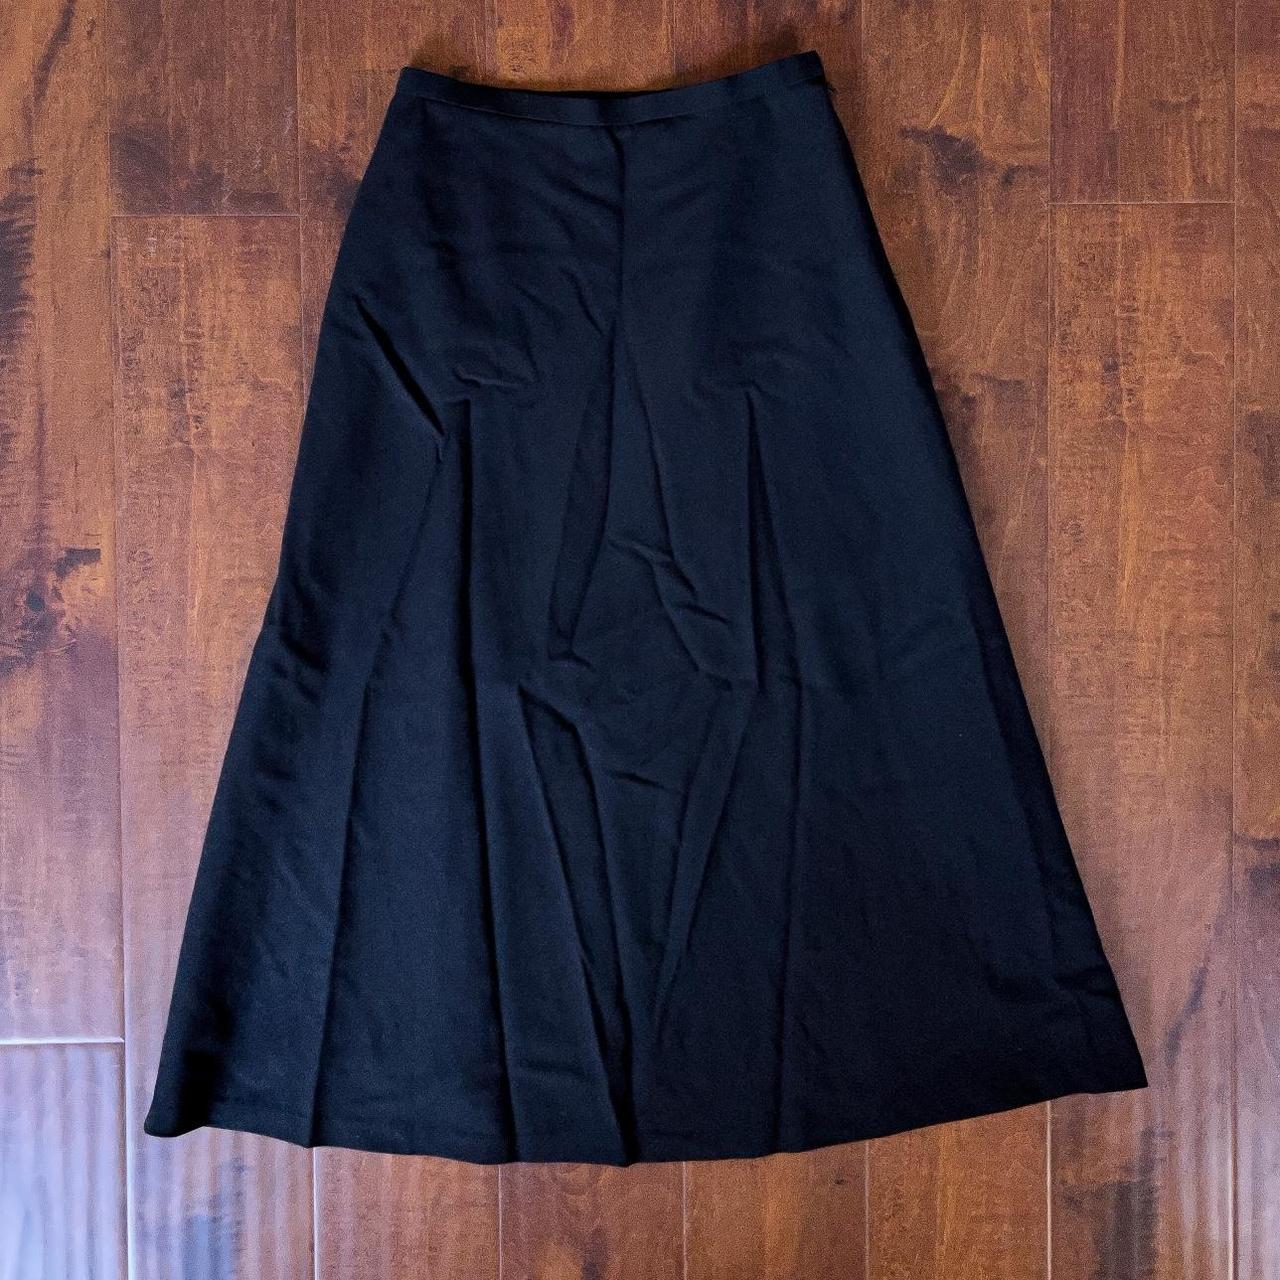 Product Image 2 - Black Gothic Skirt

Vintage long maxi